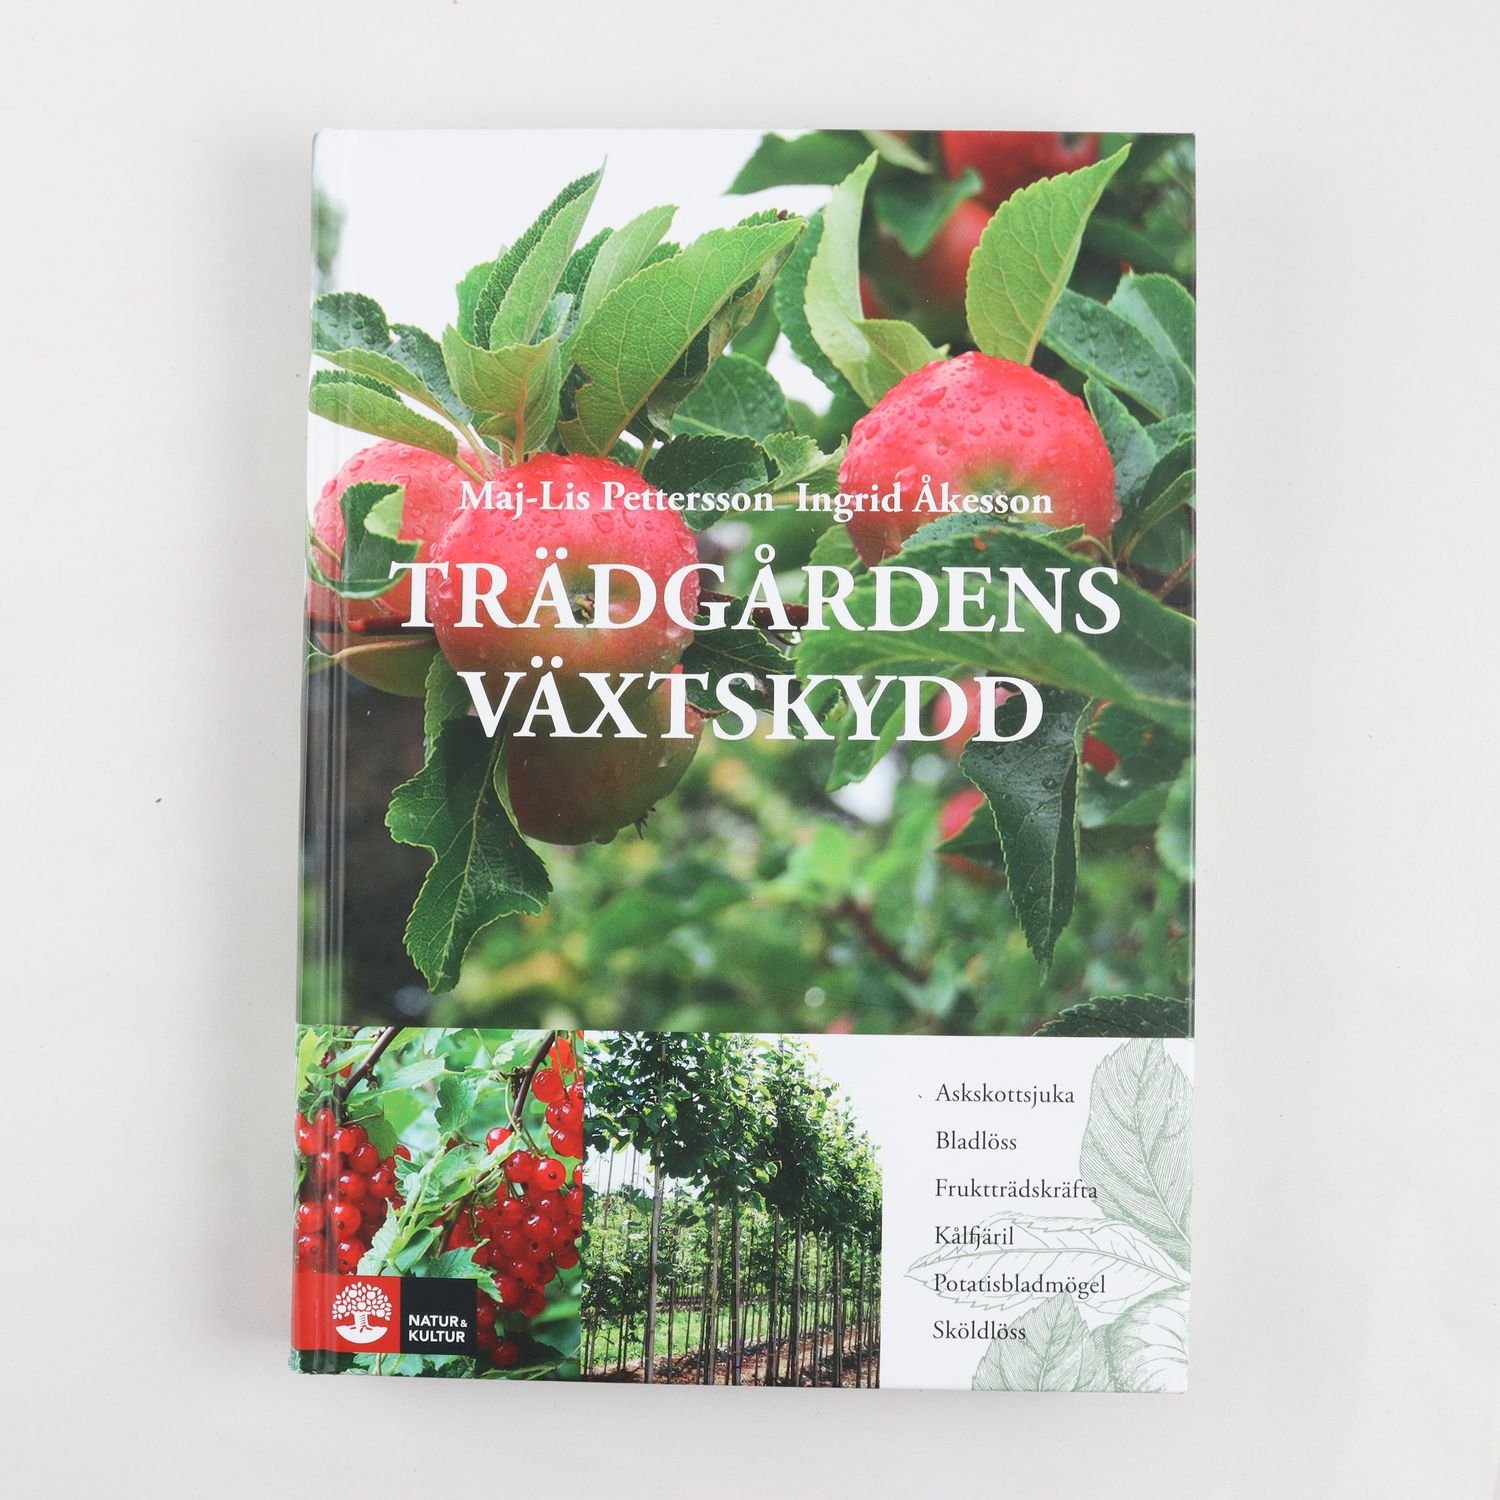 Trädgårdens växtskydd, Maj-Lis Pettersson & Ingrid Åkesson